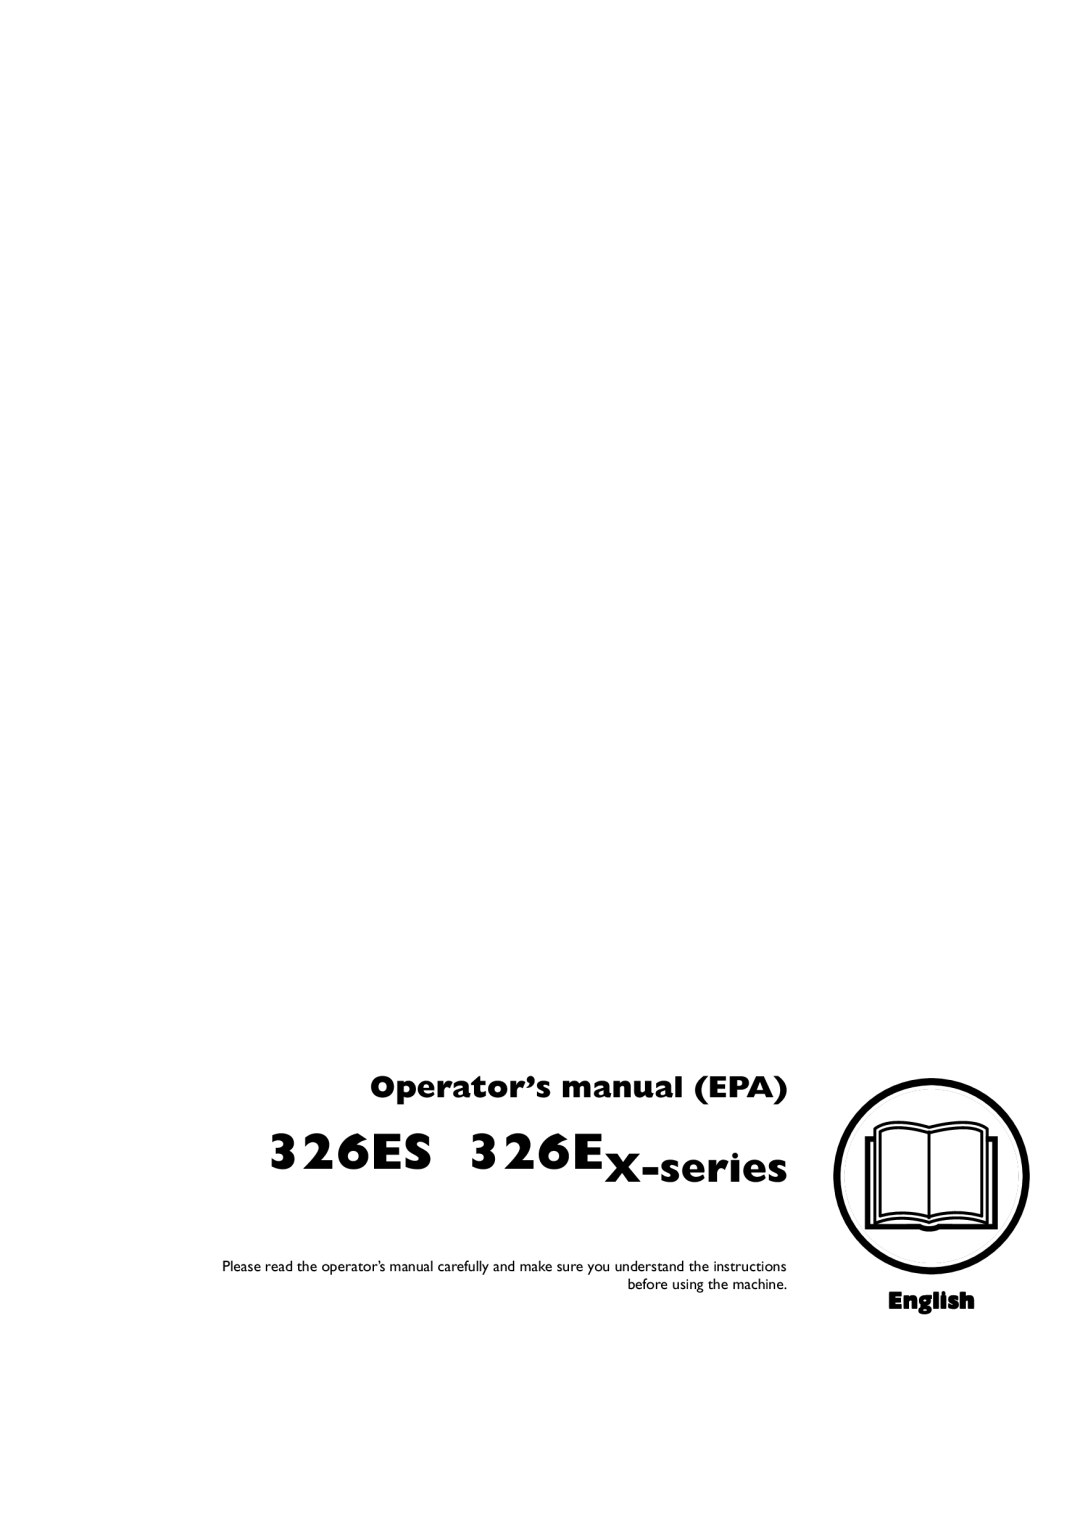 Husqvarna manual 326ES 326EX-series, Operator’s manual EPA, English 